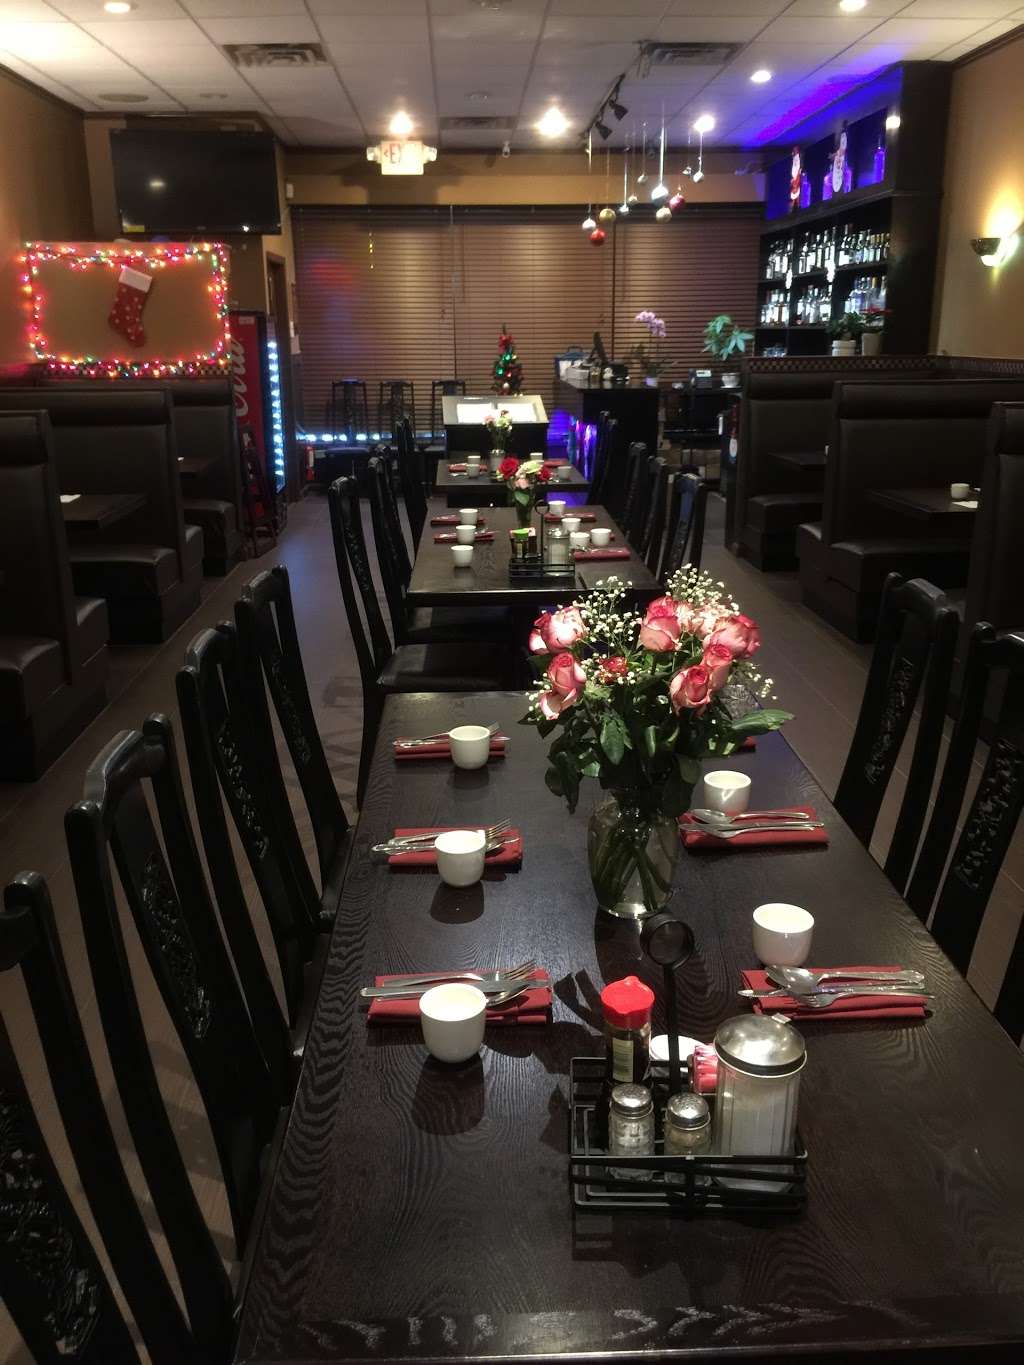 Hunan Asian Restaurant | 1812 Marsh Rd, Wilmington, DE 19810 | Phone: (302) 475-8300